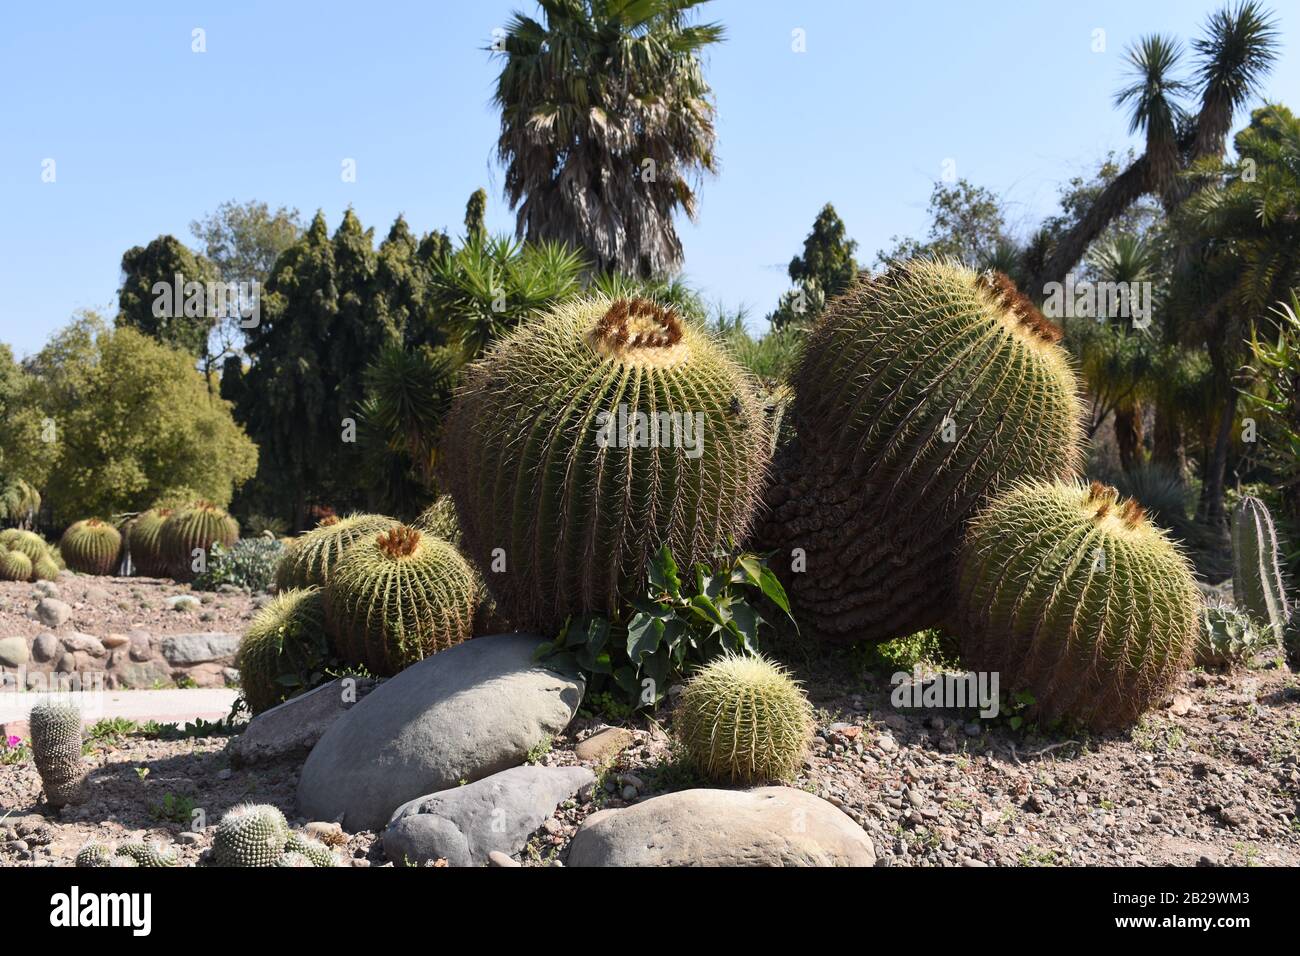 Cactus Golden Barrel en un jardín de cactus. Foto de stock